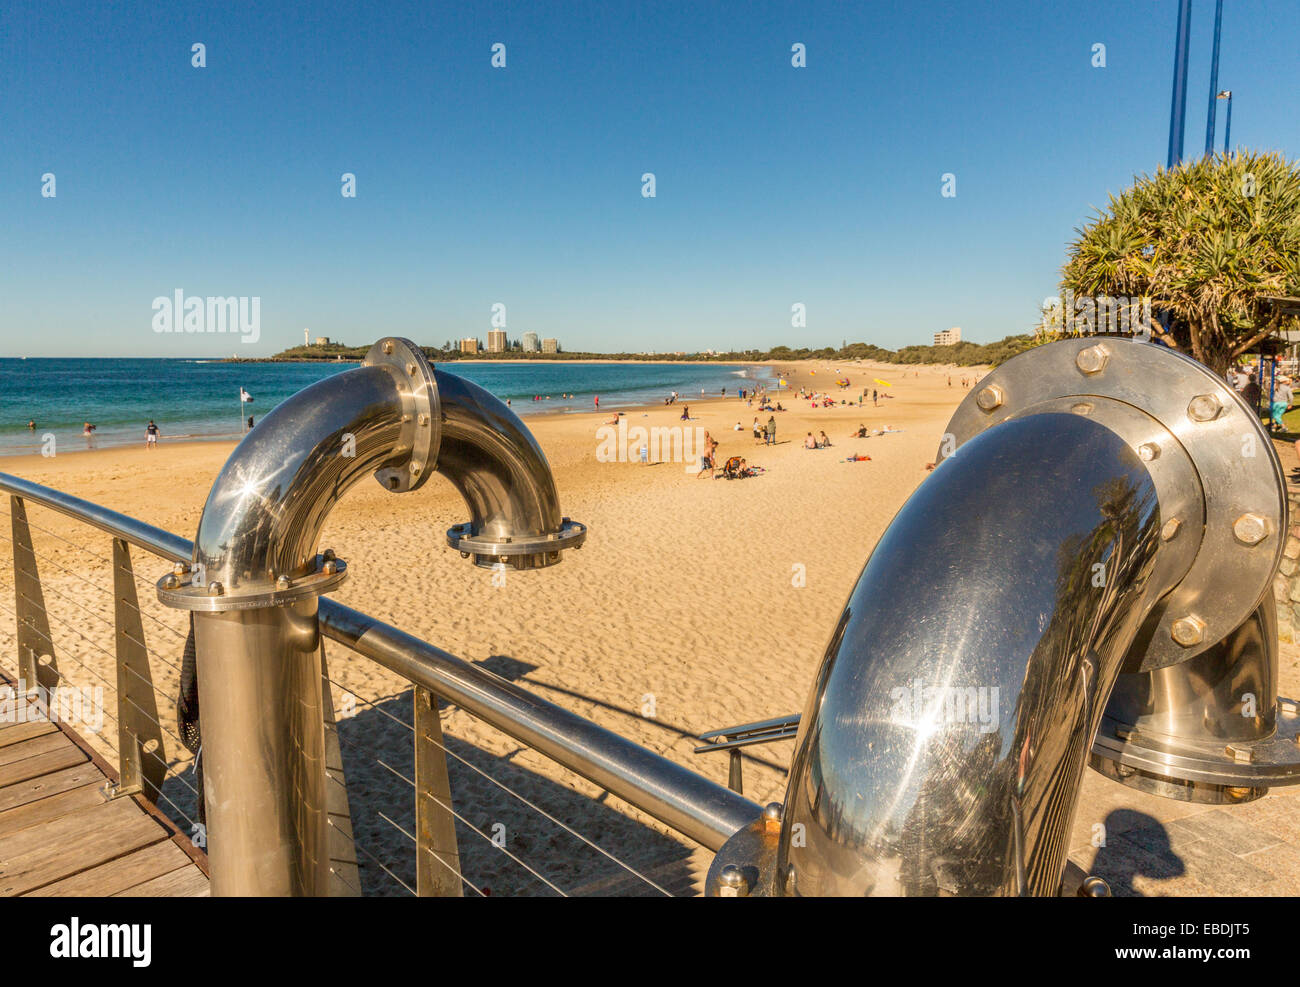 Innovating lighting at scenic beach viewing area at Mooloolaba, Sunshine Coast, Queensland, Australia Stock Photo